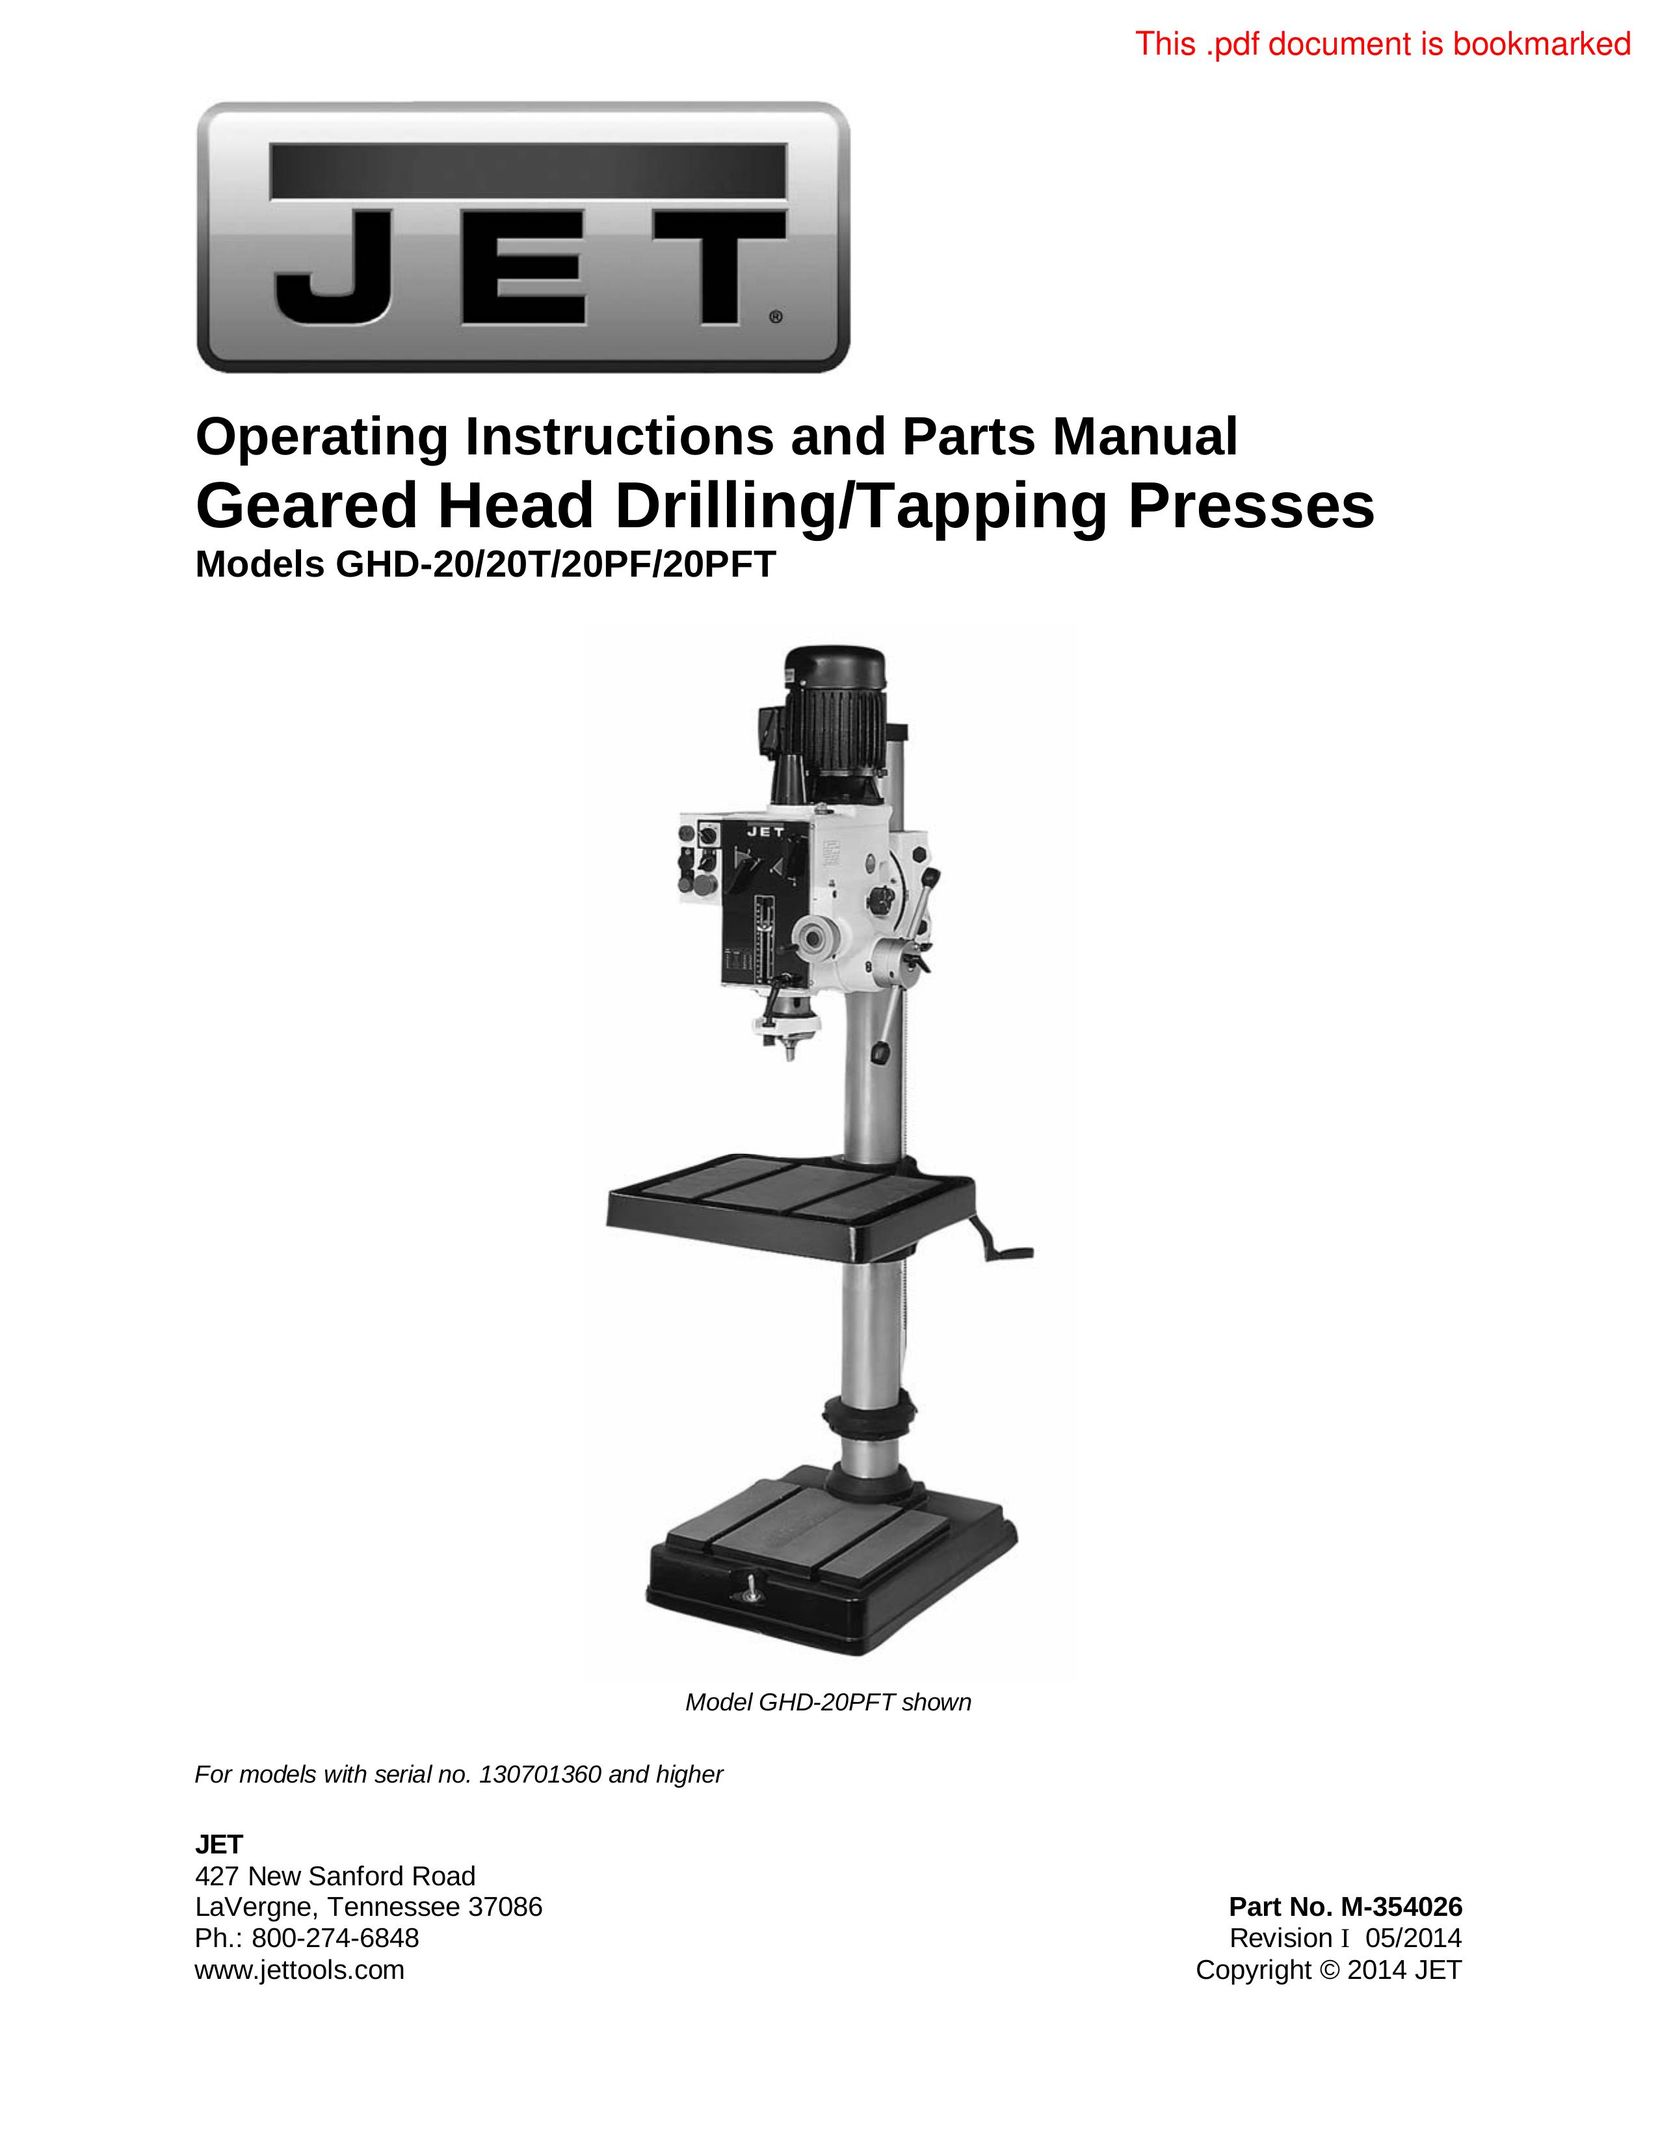 Jet Tools 20PFT Cordless Drill User Manual